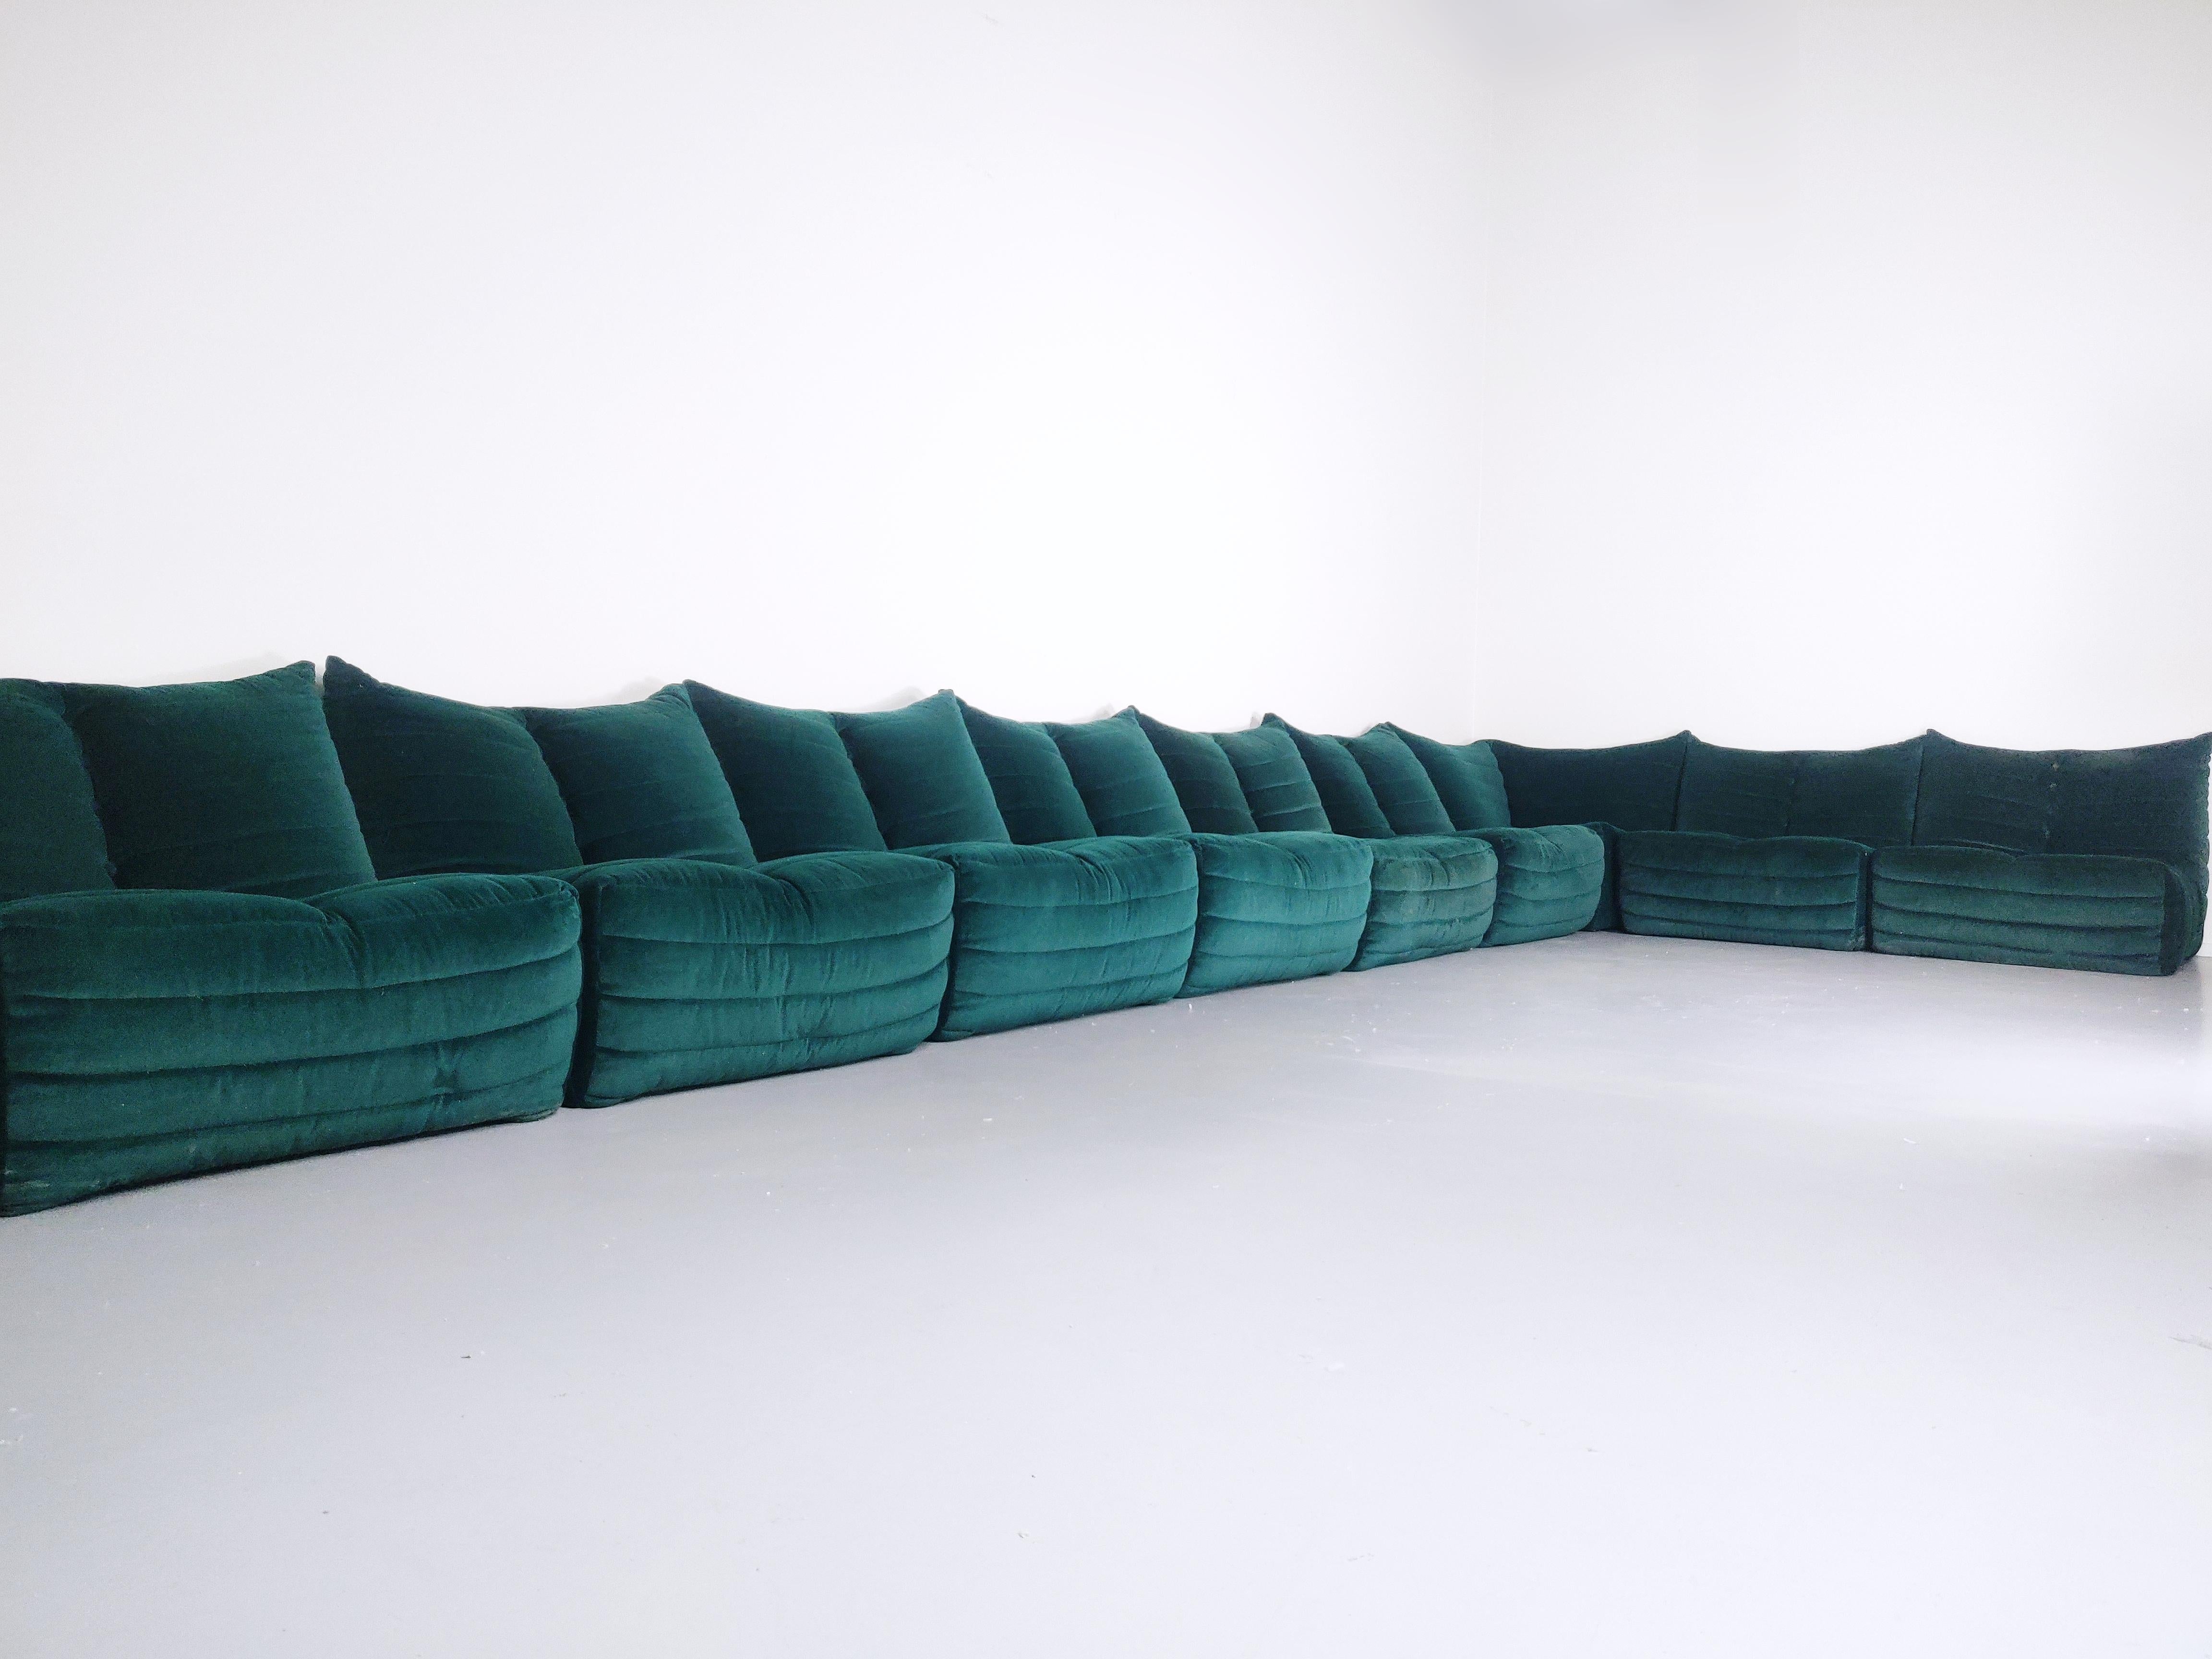 Sectional sofa Model Zozo by Seven Salotti, Italy, 1970s
9 elements.